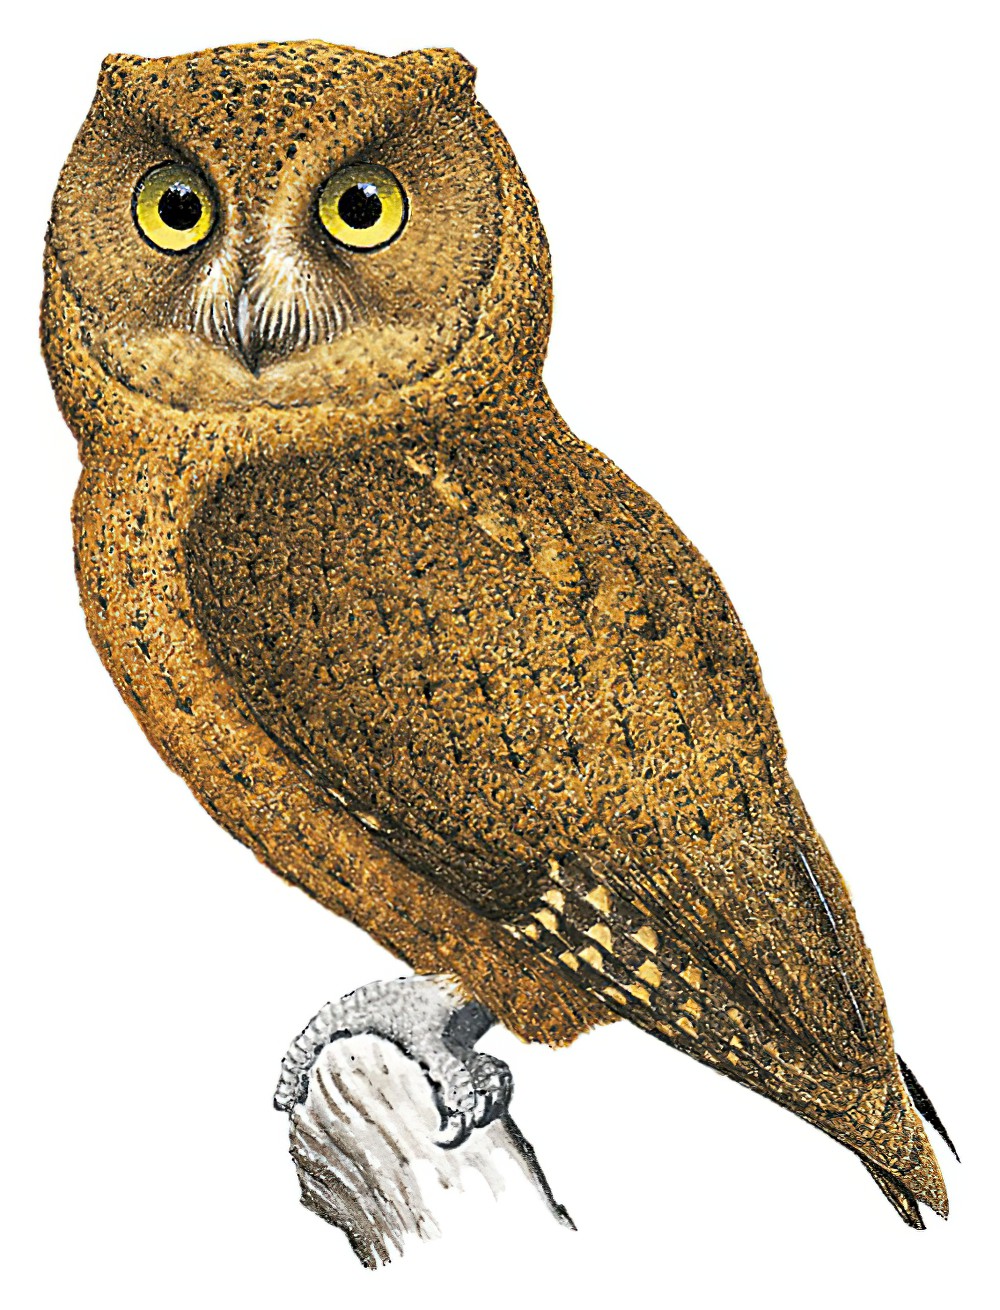 莫岛角鸮 / Moheli Scops Owl / Otus moheliensis